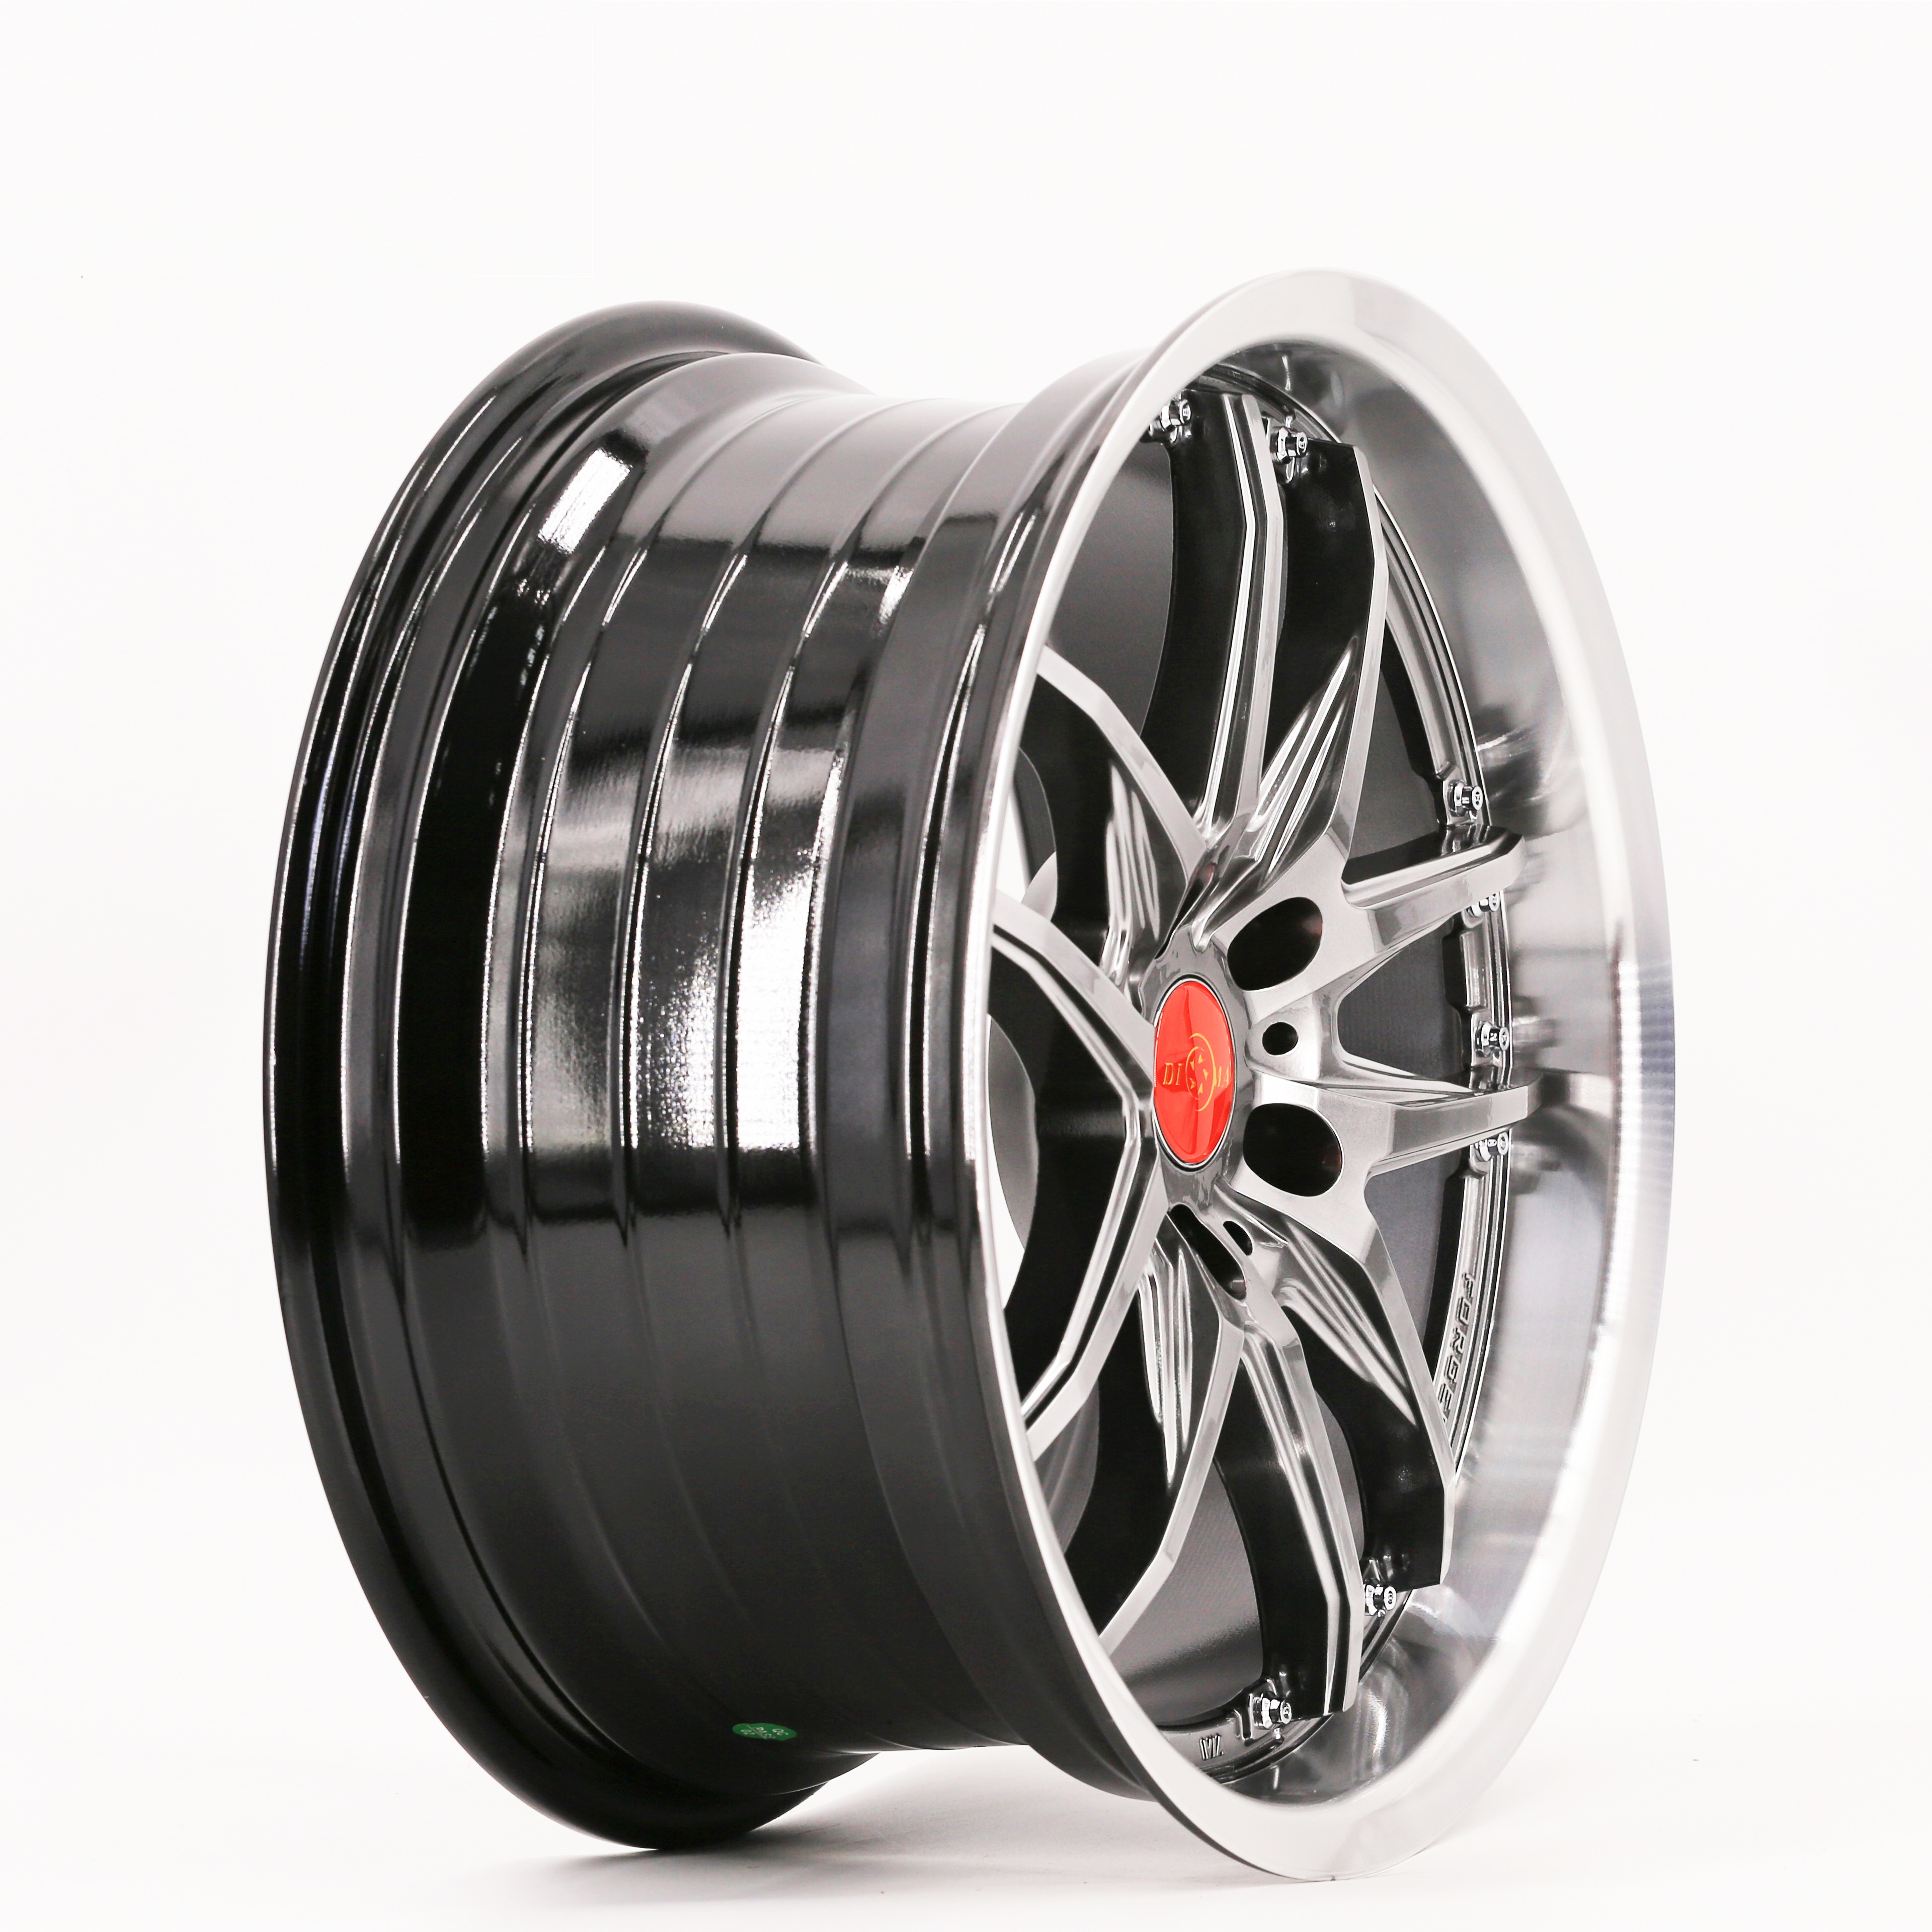 18x.8.5 Inch Aluminum Alloy Wheel Rims With 5 Double Spoke